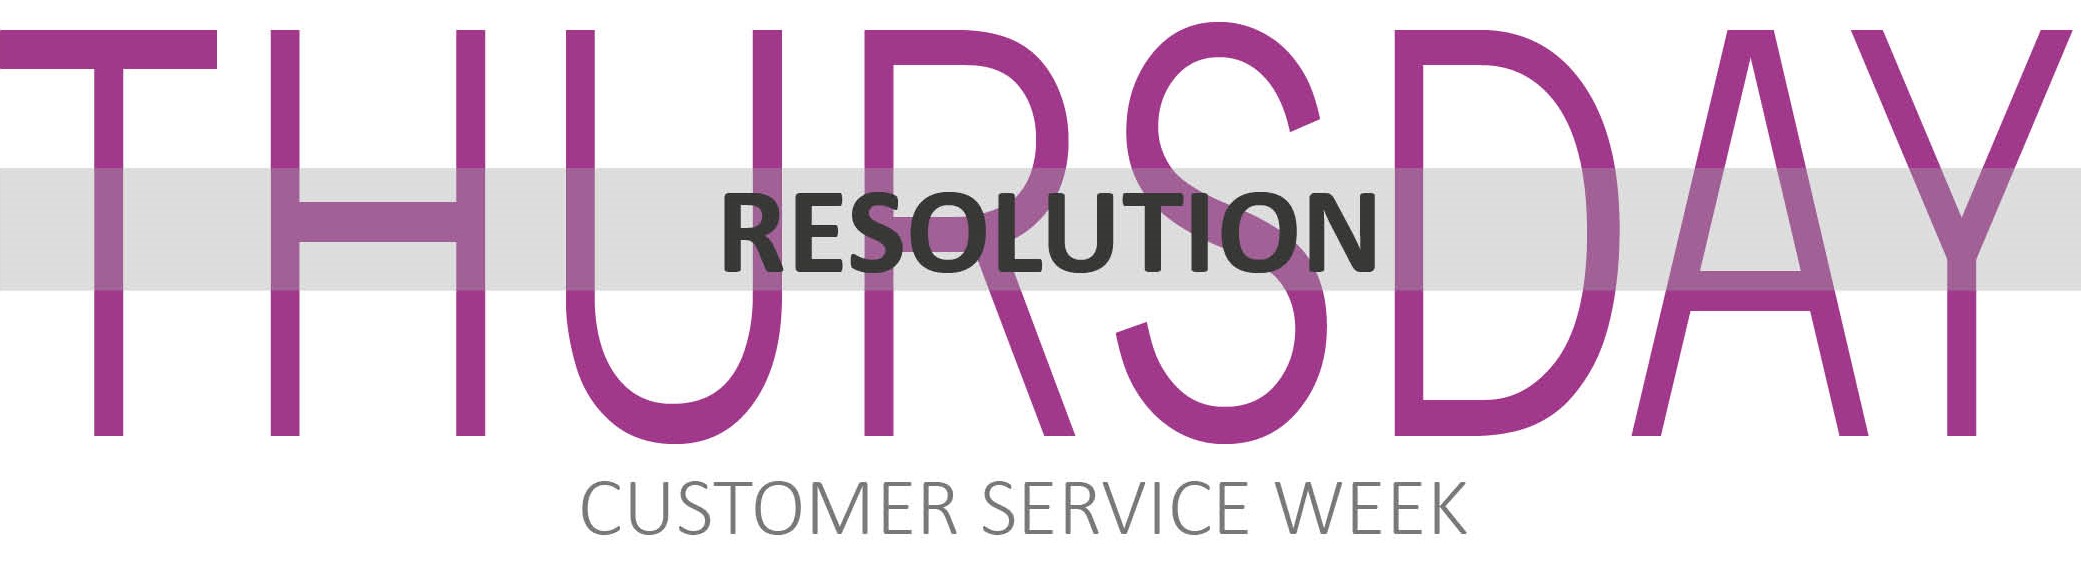 Customer Service Week - Thursday